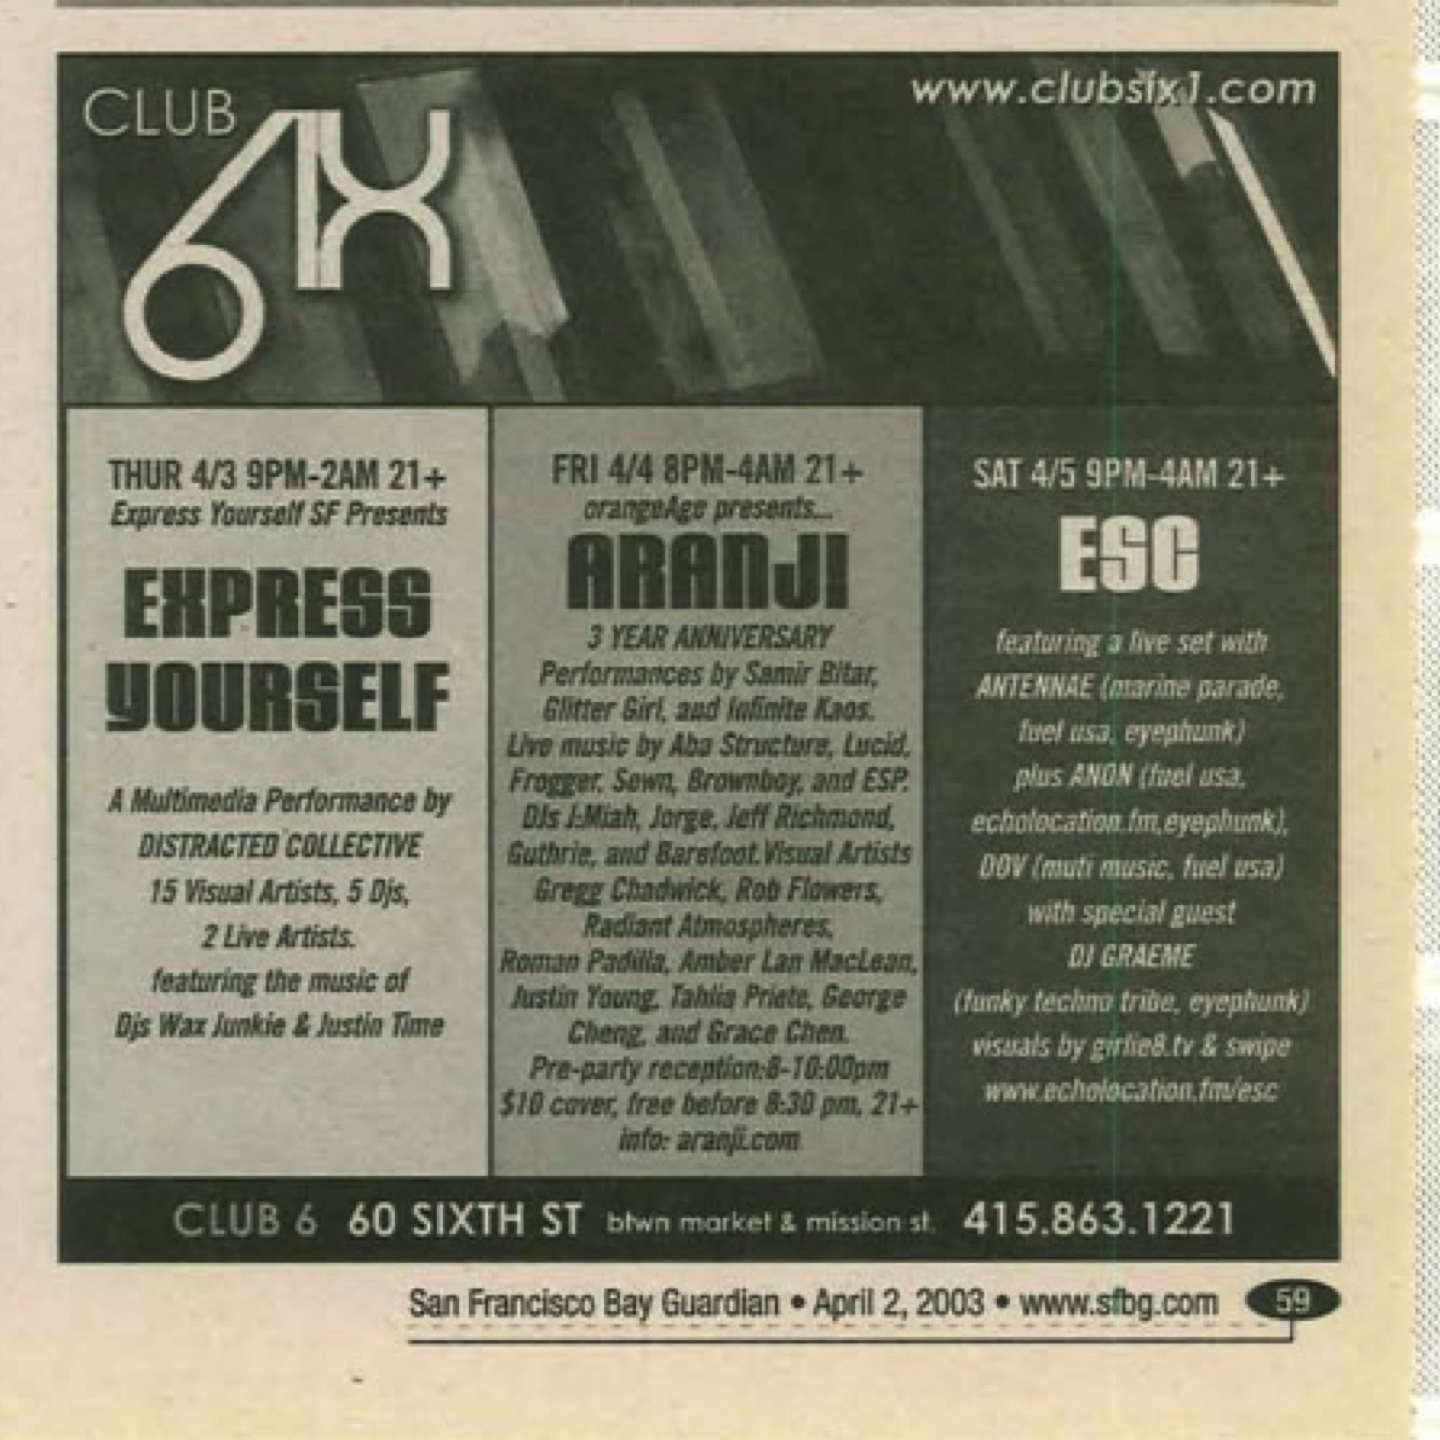 SF Bay Guardian Ad for Aranji at Club Six in San Francisco - April 2003